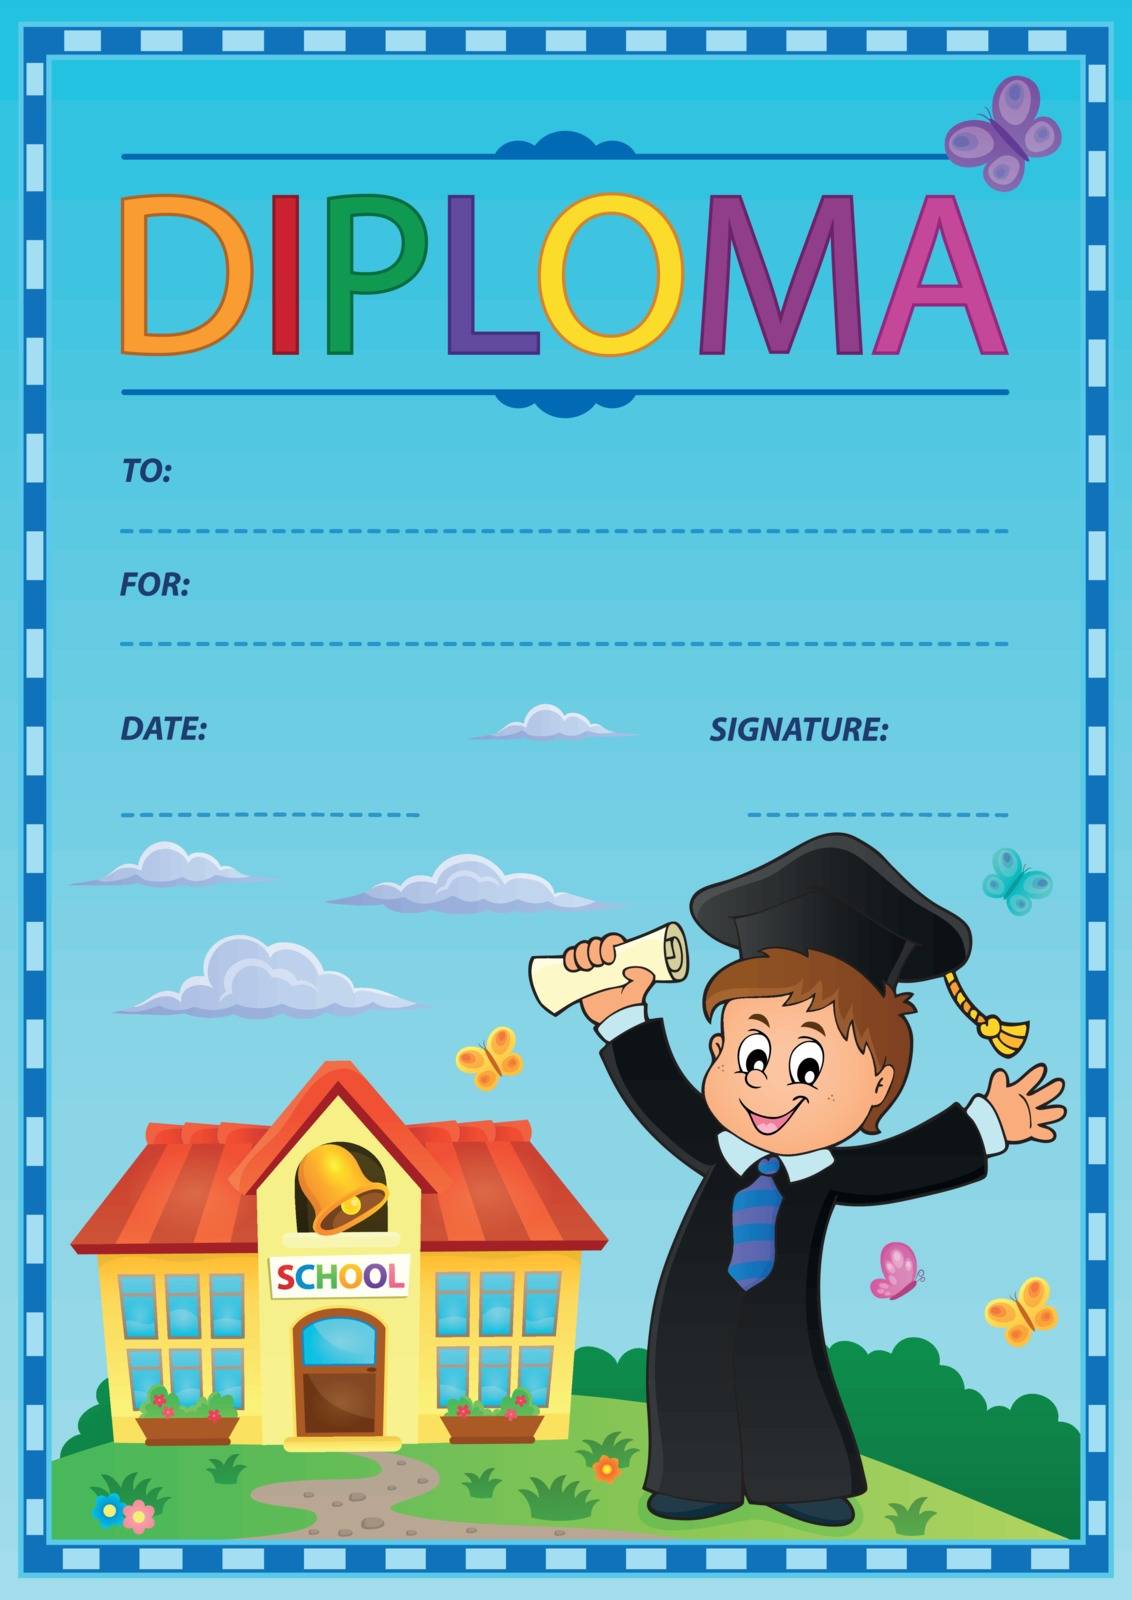 Diploma subject image 2 - eps10 vector illustration.